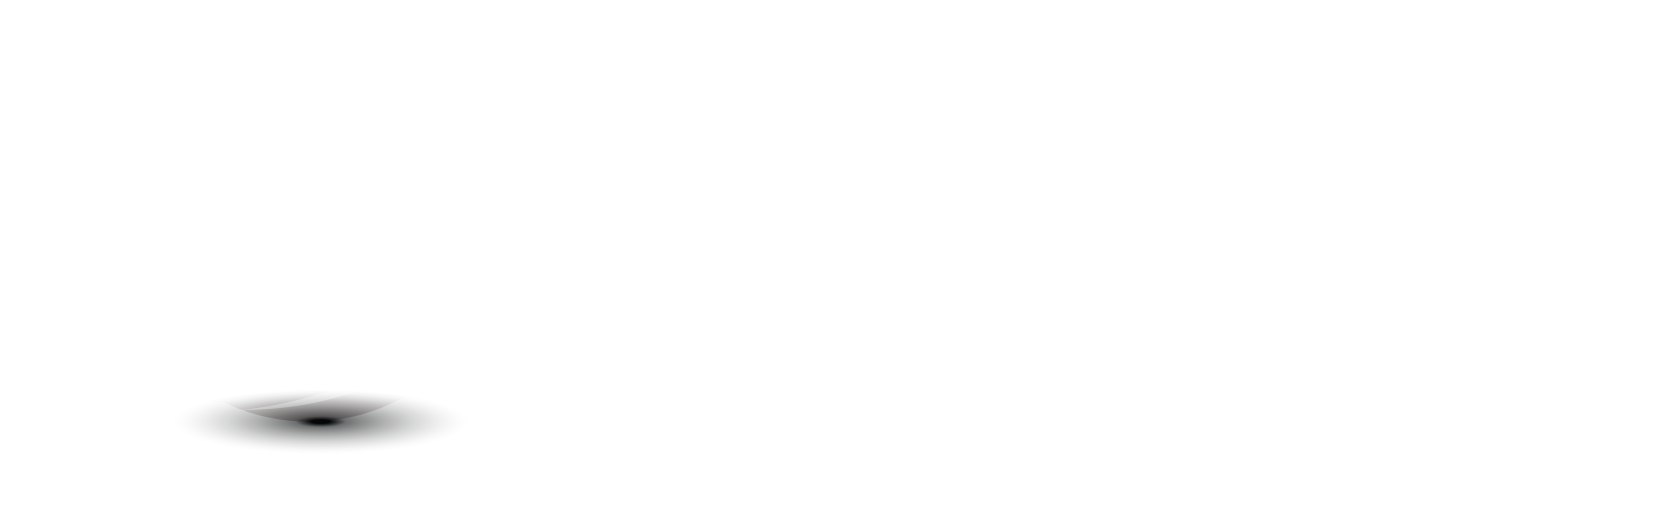 The Sales Innovation Expo California logo